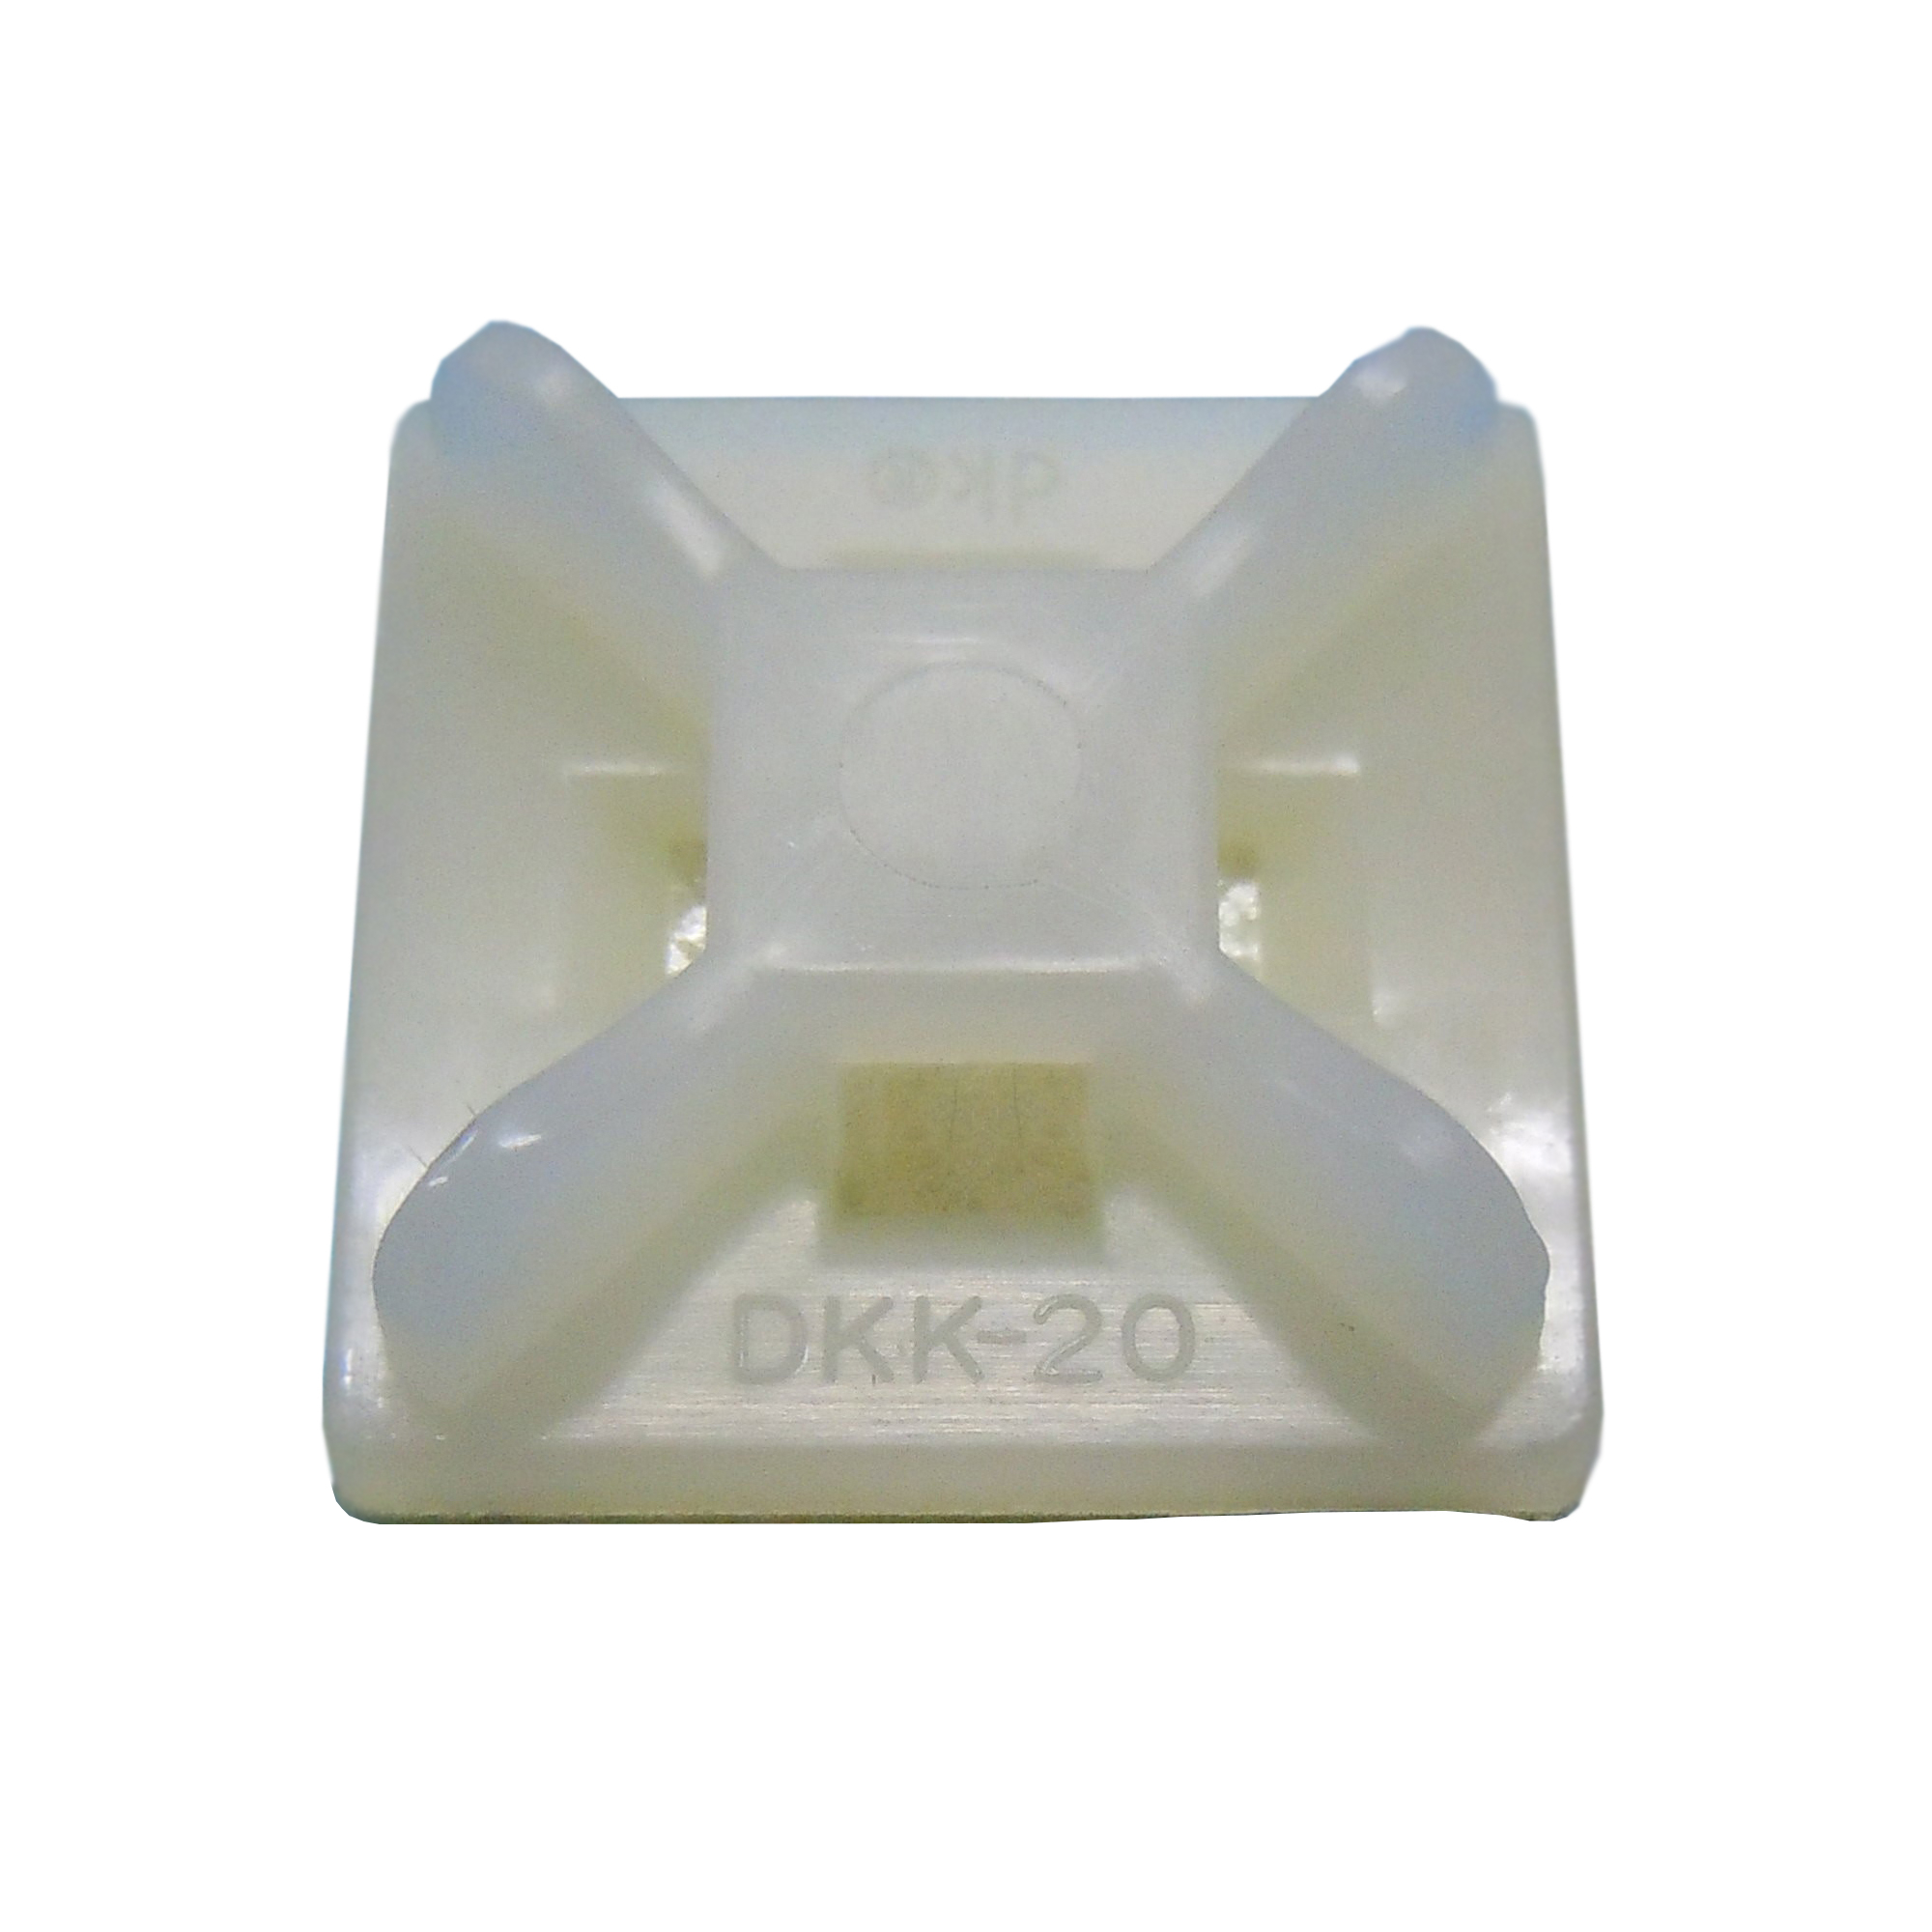 Adhesive Fixture (Strong Adhesive) (DKK-30-100P) 